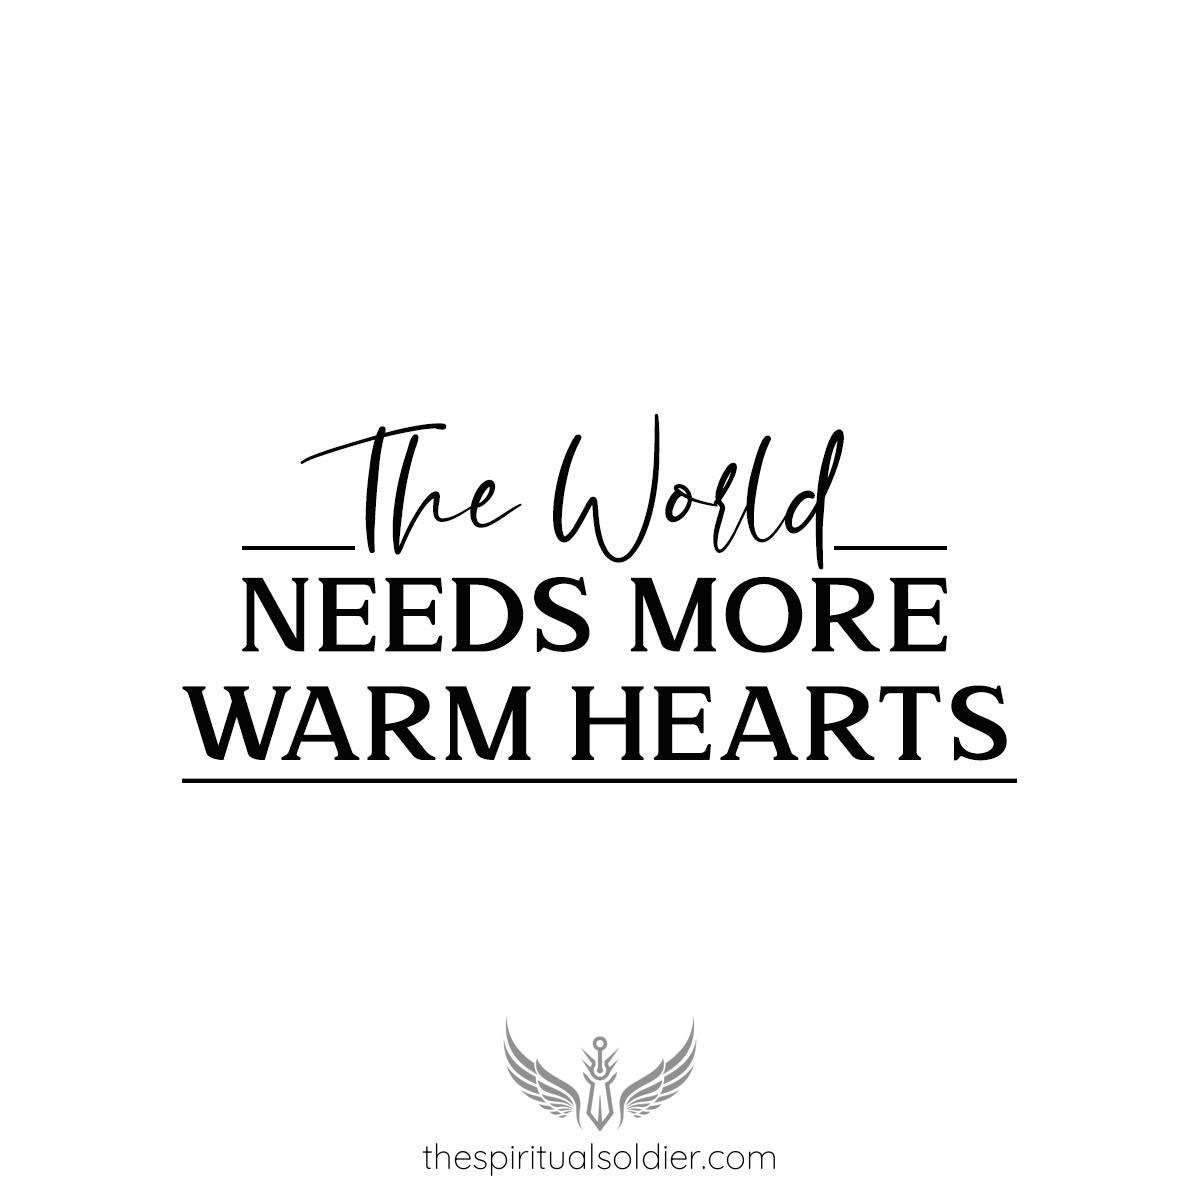 The world needs more warm hearts.

#drlepora #spiritualSoldier #SpreadLove #KindnessMatters #BeKind #ShareJoy #LoveWins #ActsOfKindness #Compassion #Empathy #PositiveVibes #KindnessIsContagious #SpreadPositivity #ChooseKindness #RandomActsOfKindness